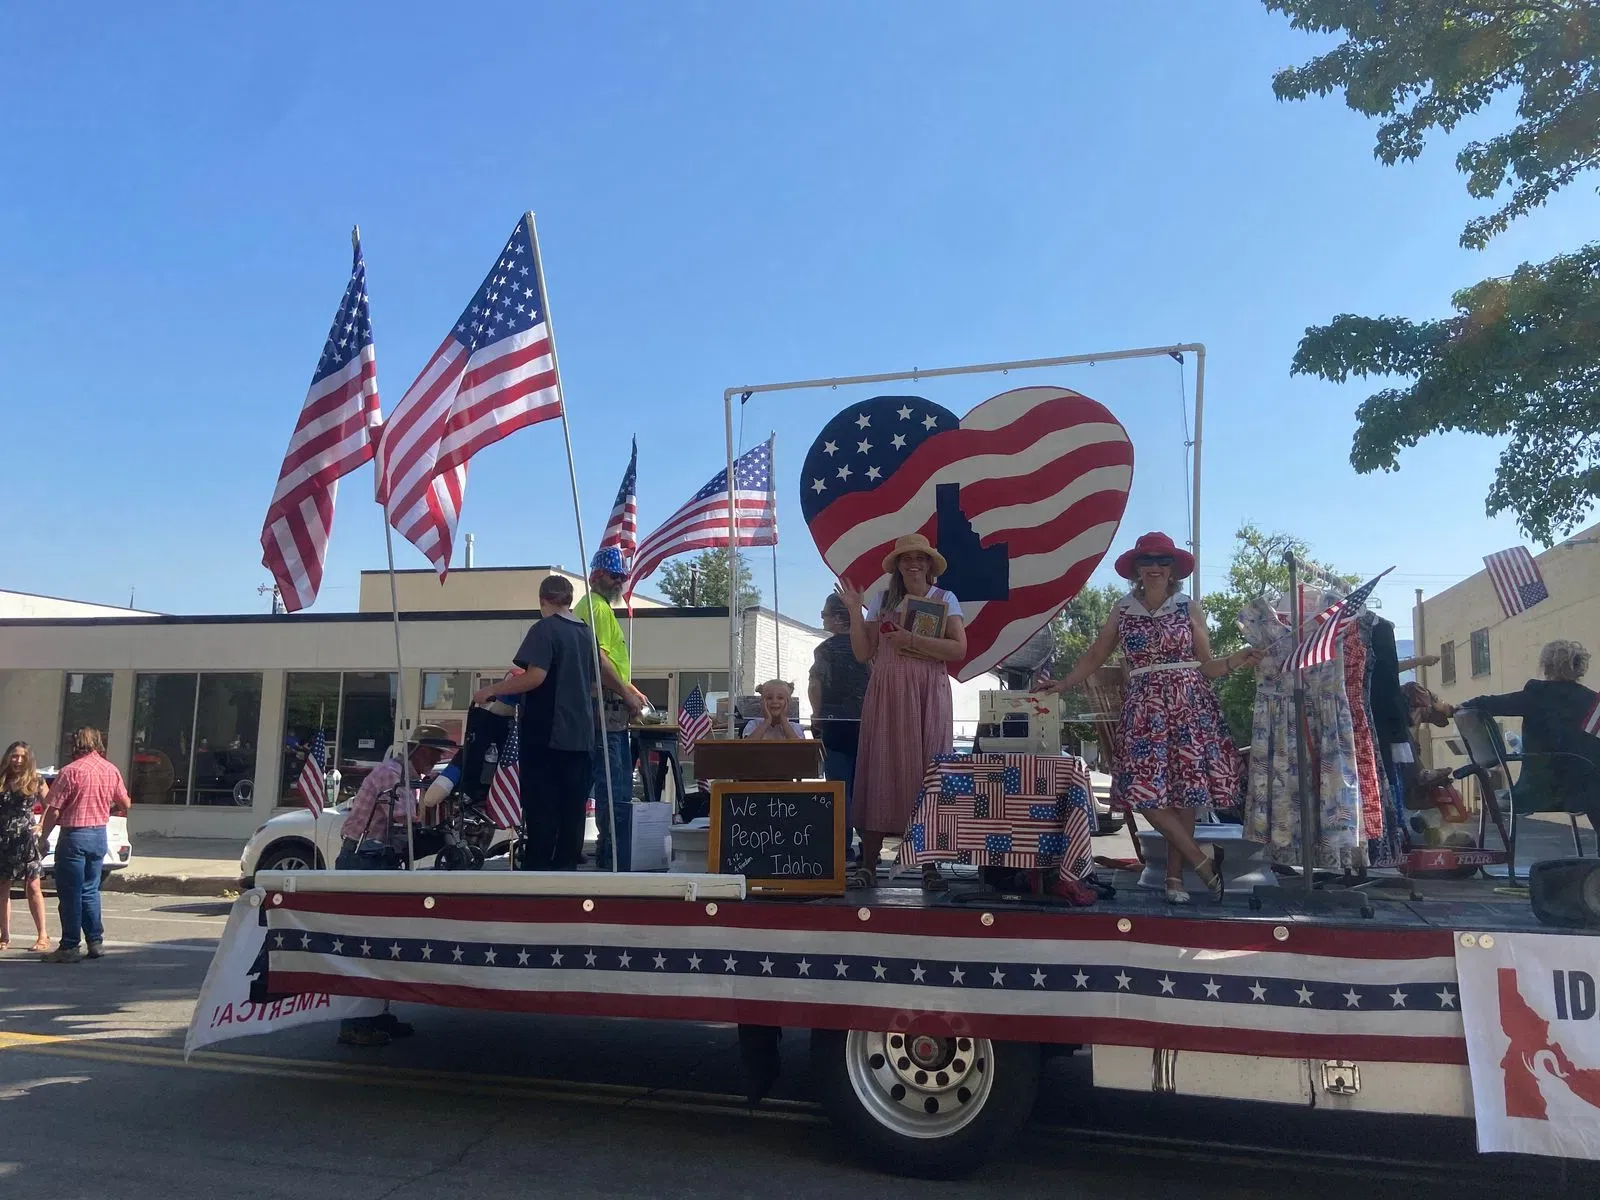 We the People of Idaho parade float from the Idaho GOP.